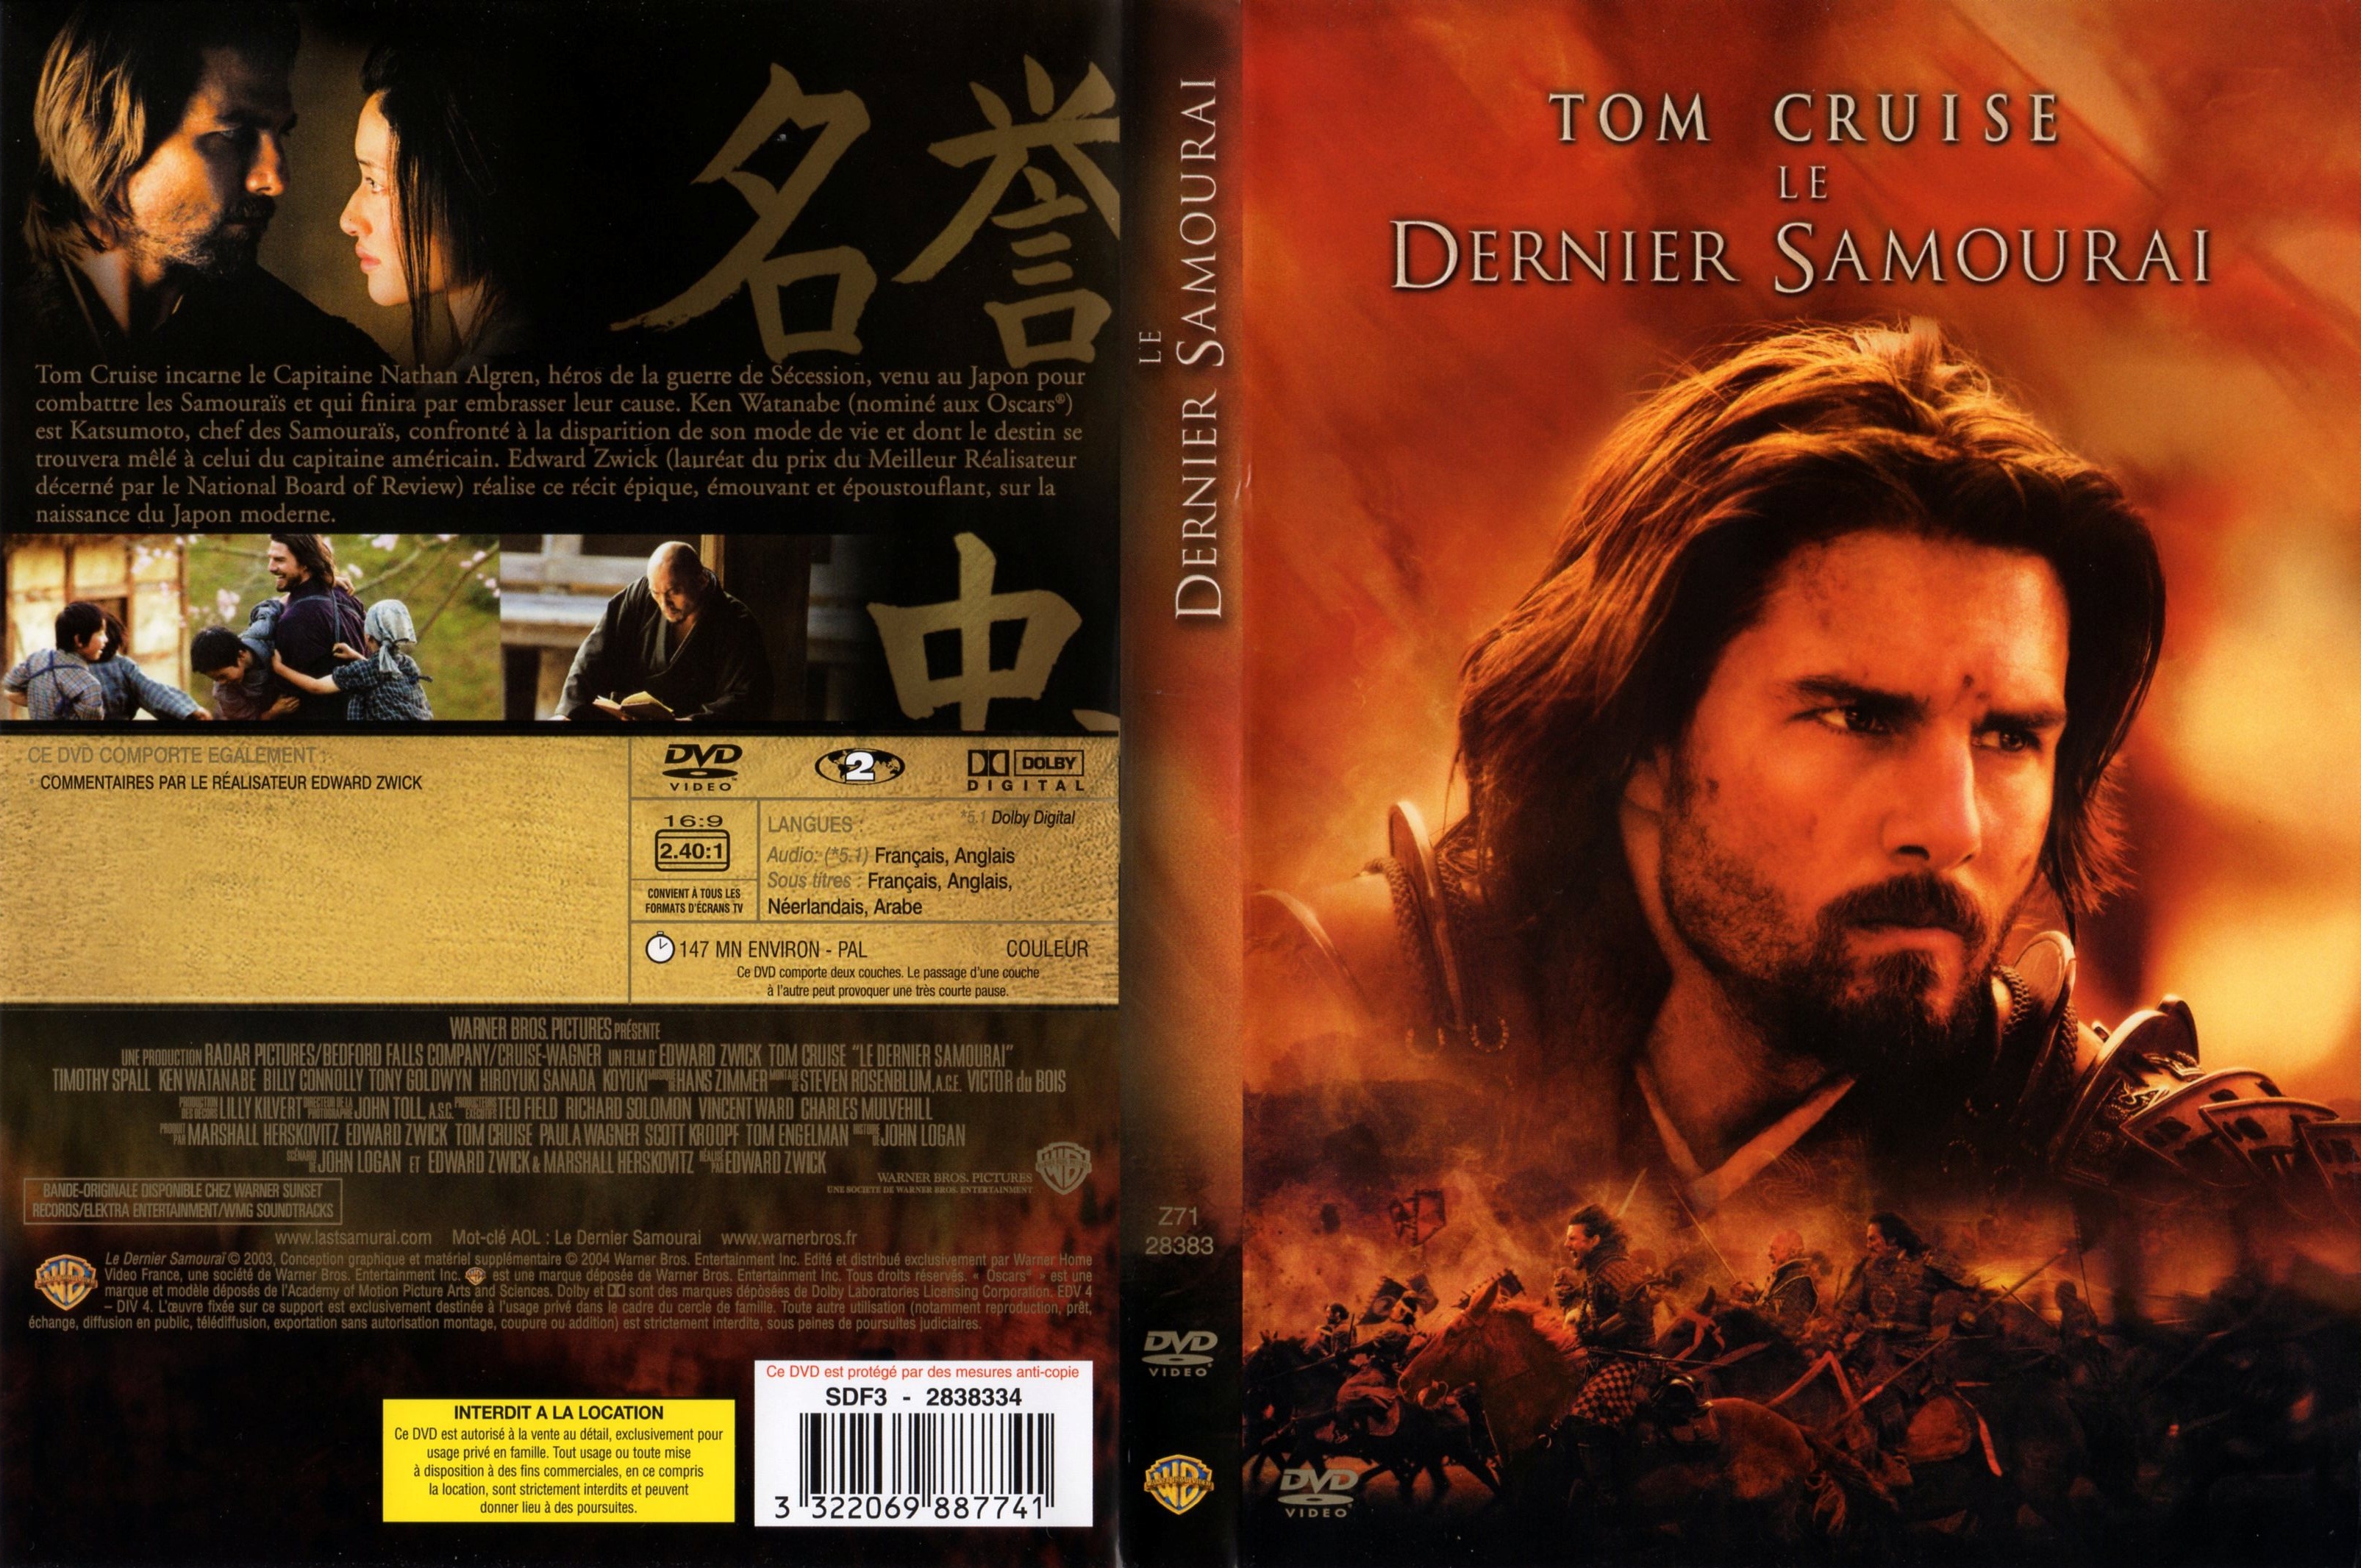 Jaquette DVD Le dernier samourai v2